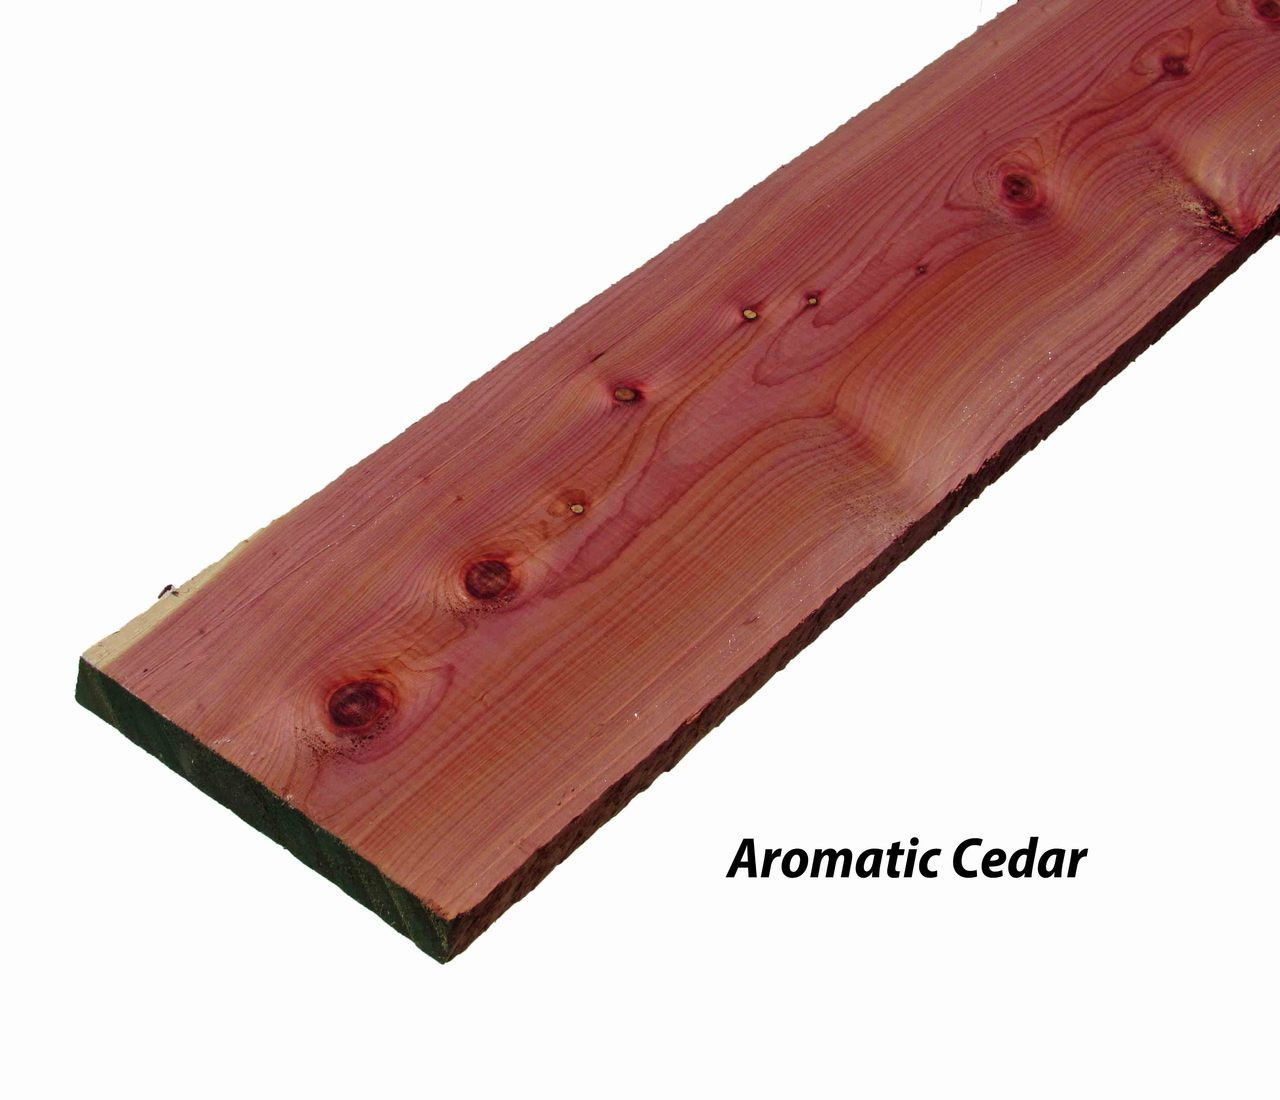  Aromatic Cedar